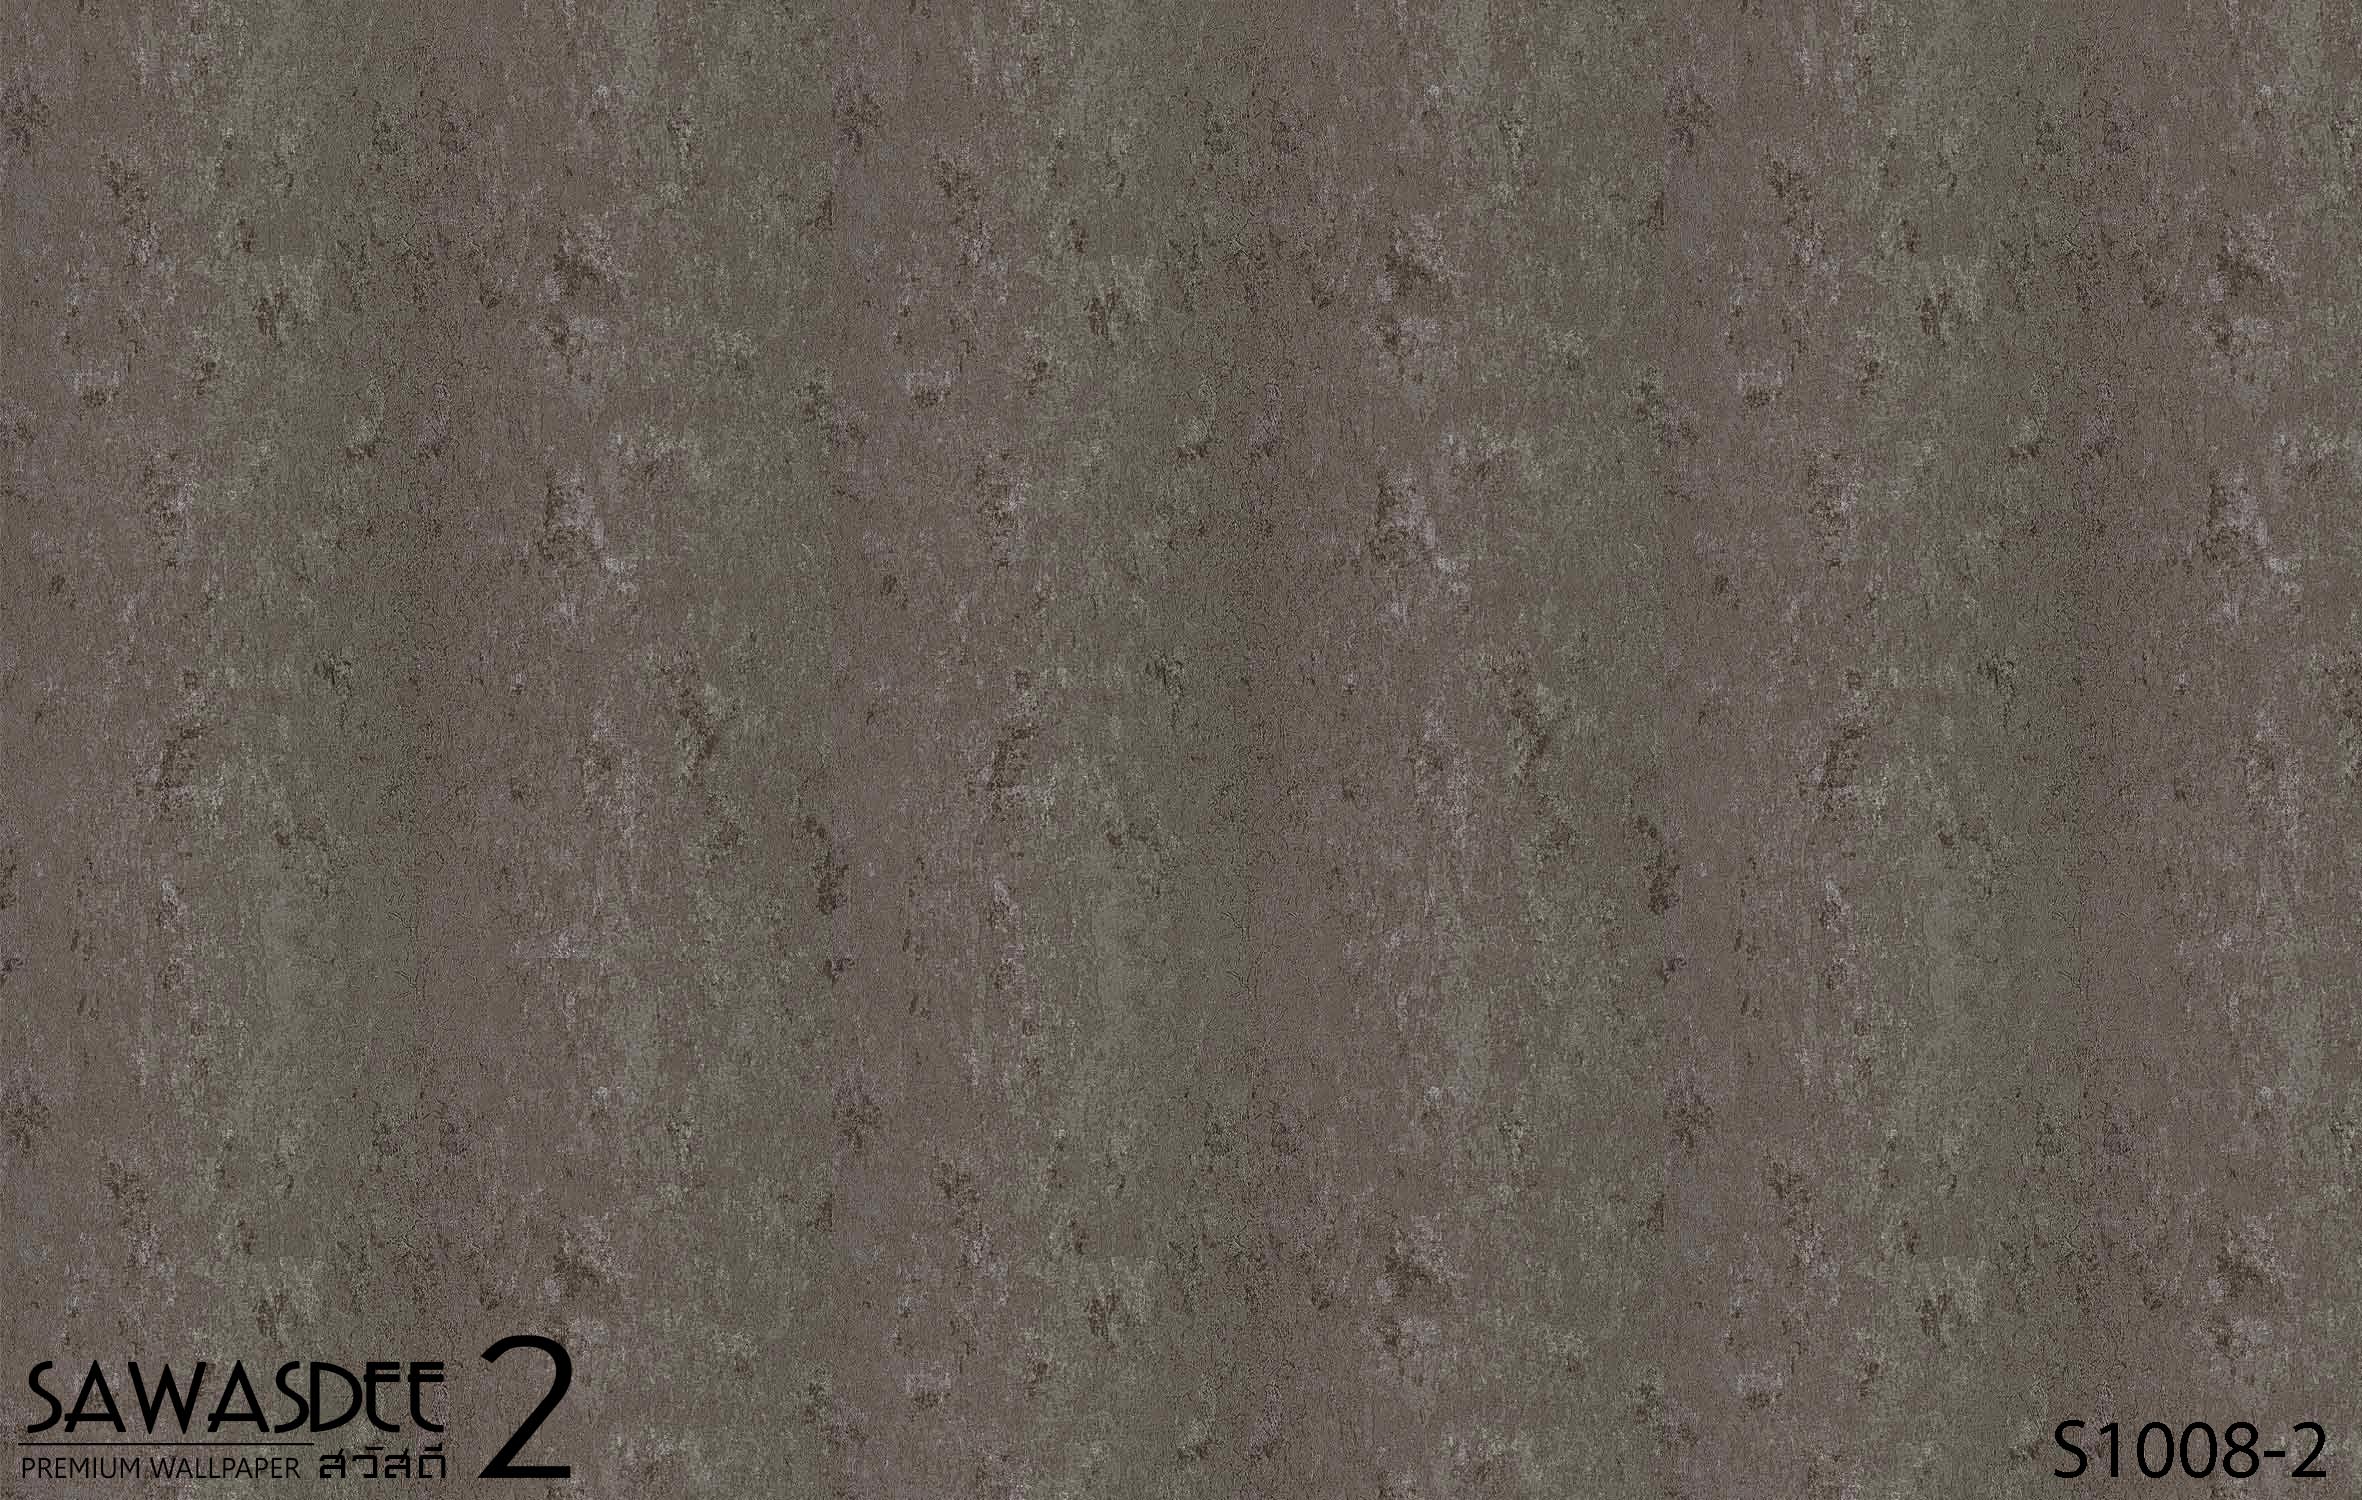 Wallpaper (SAWASDEE 2) S1008-2